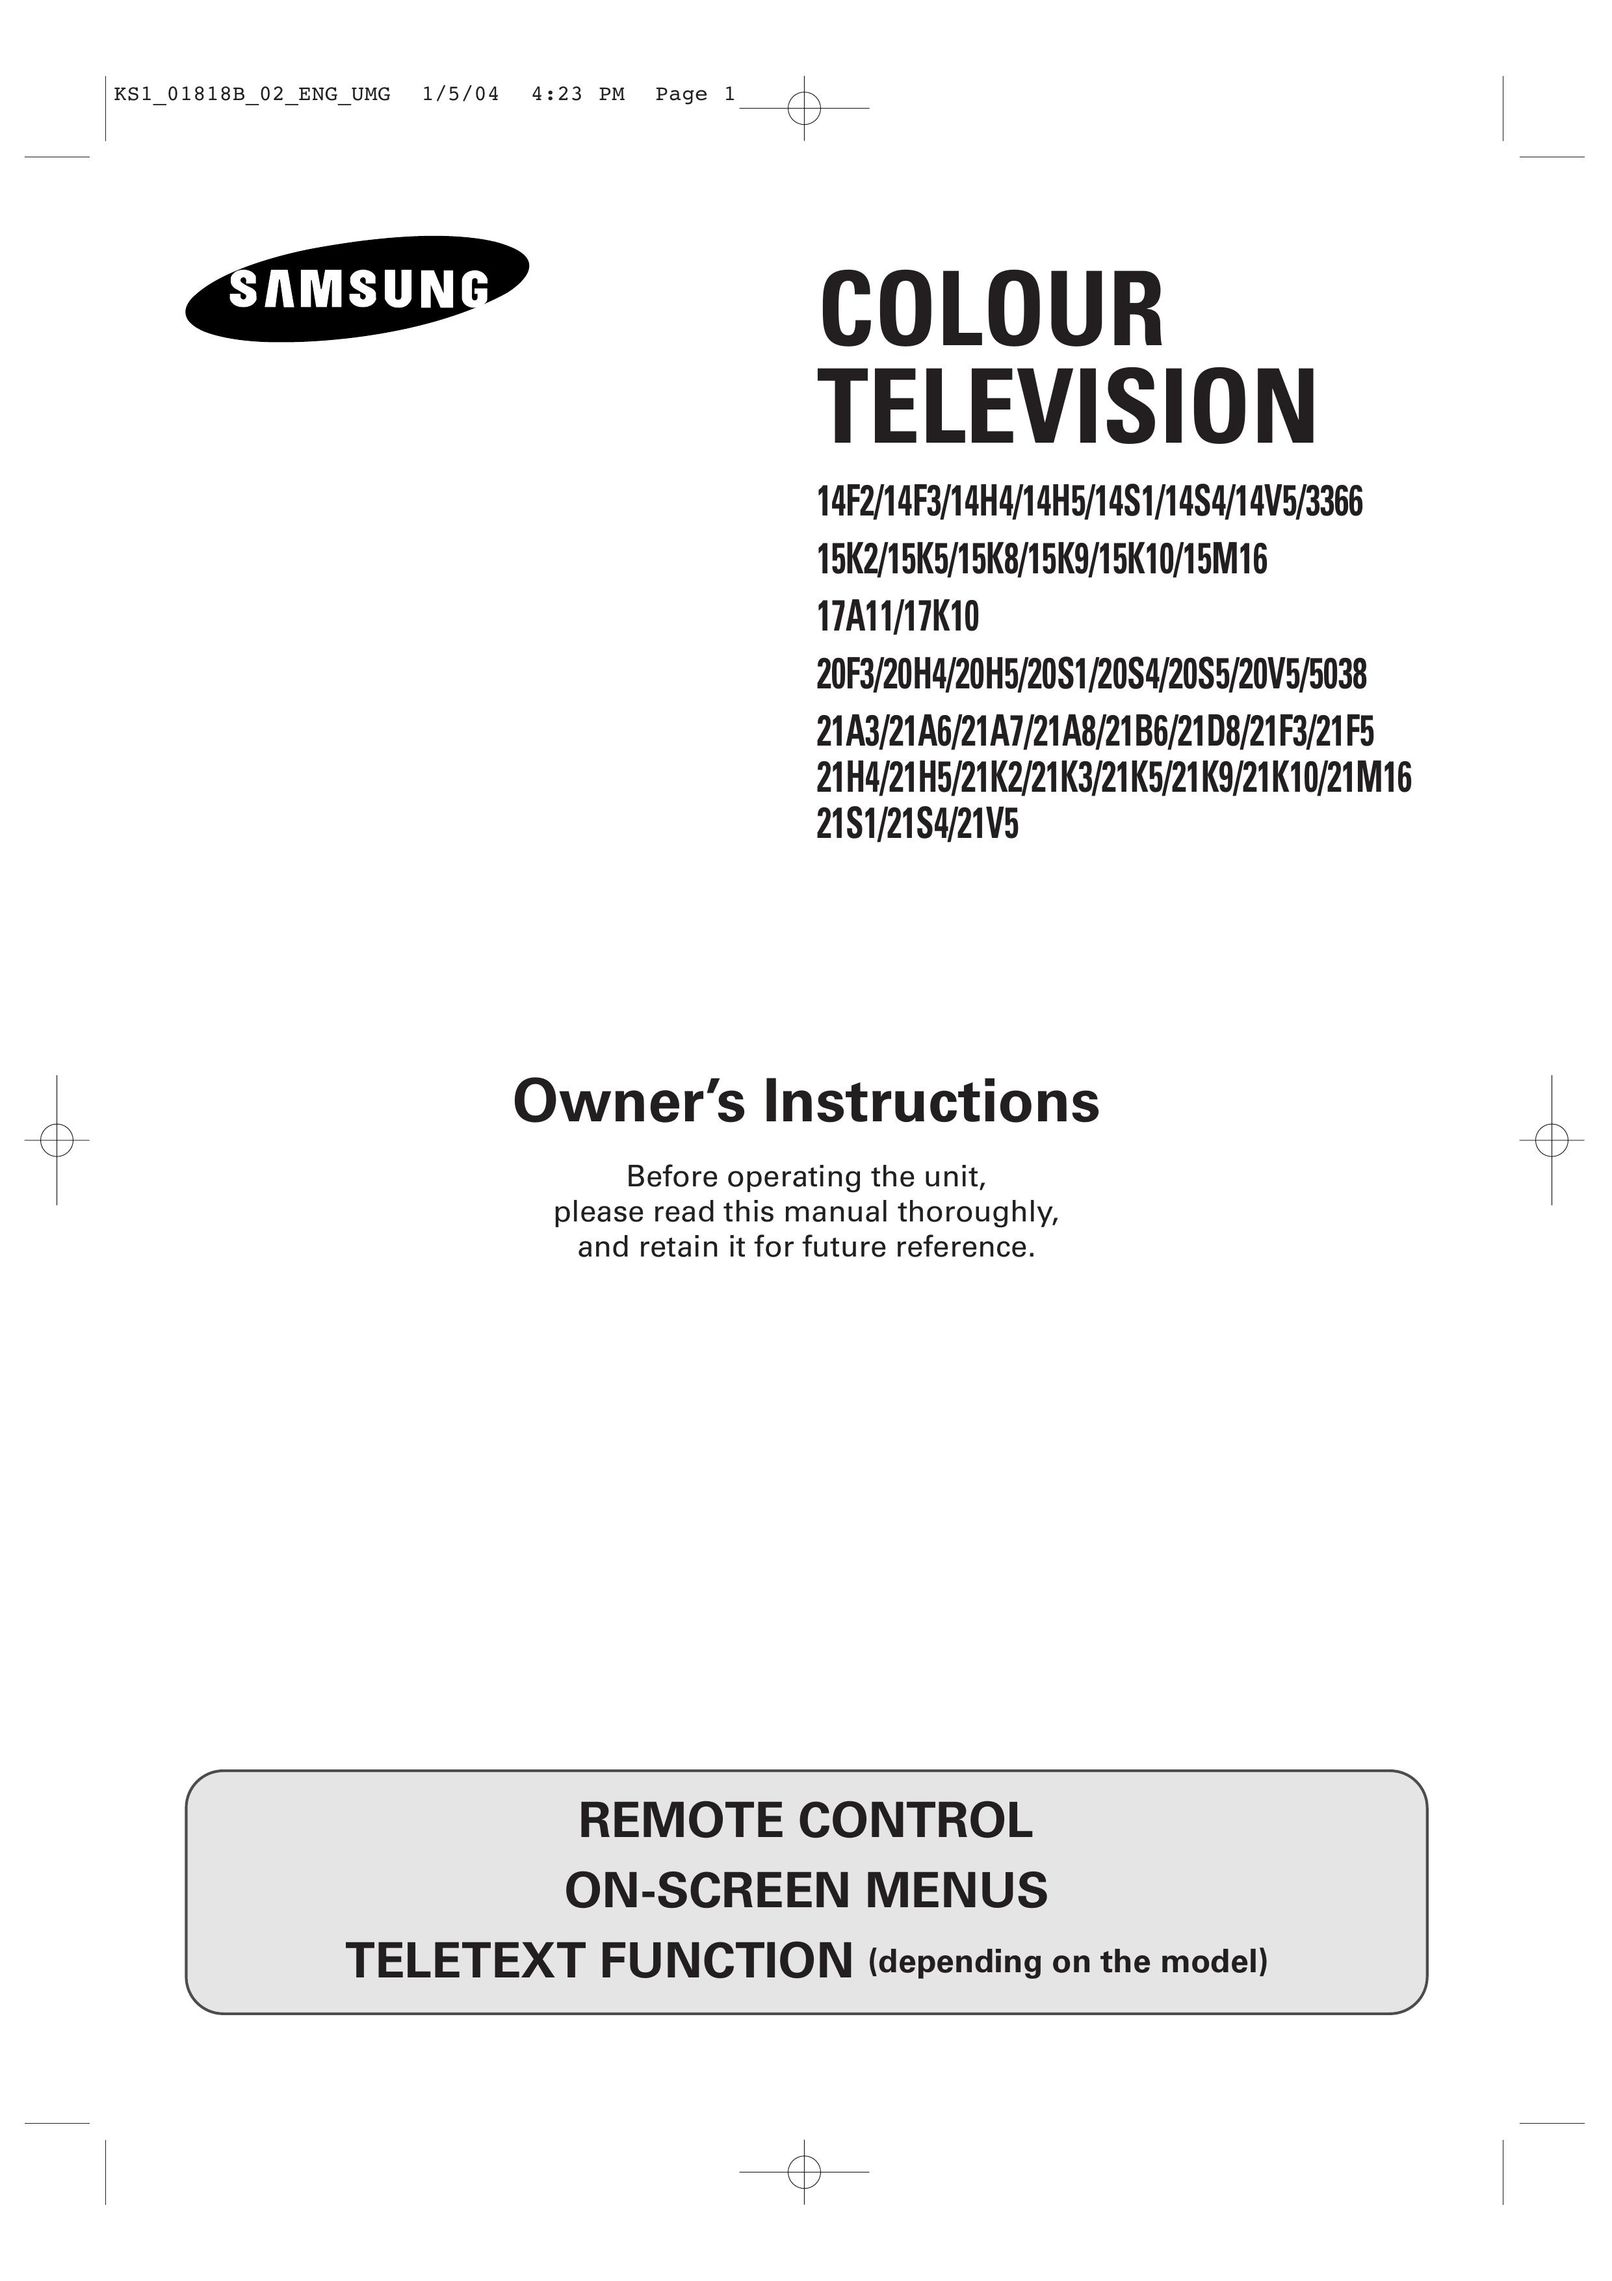 Samsung 17K10 CRT Television User Manual